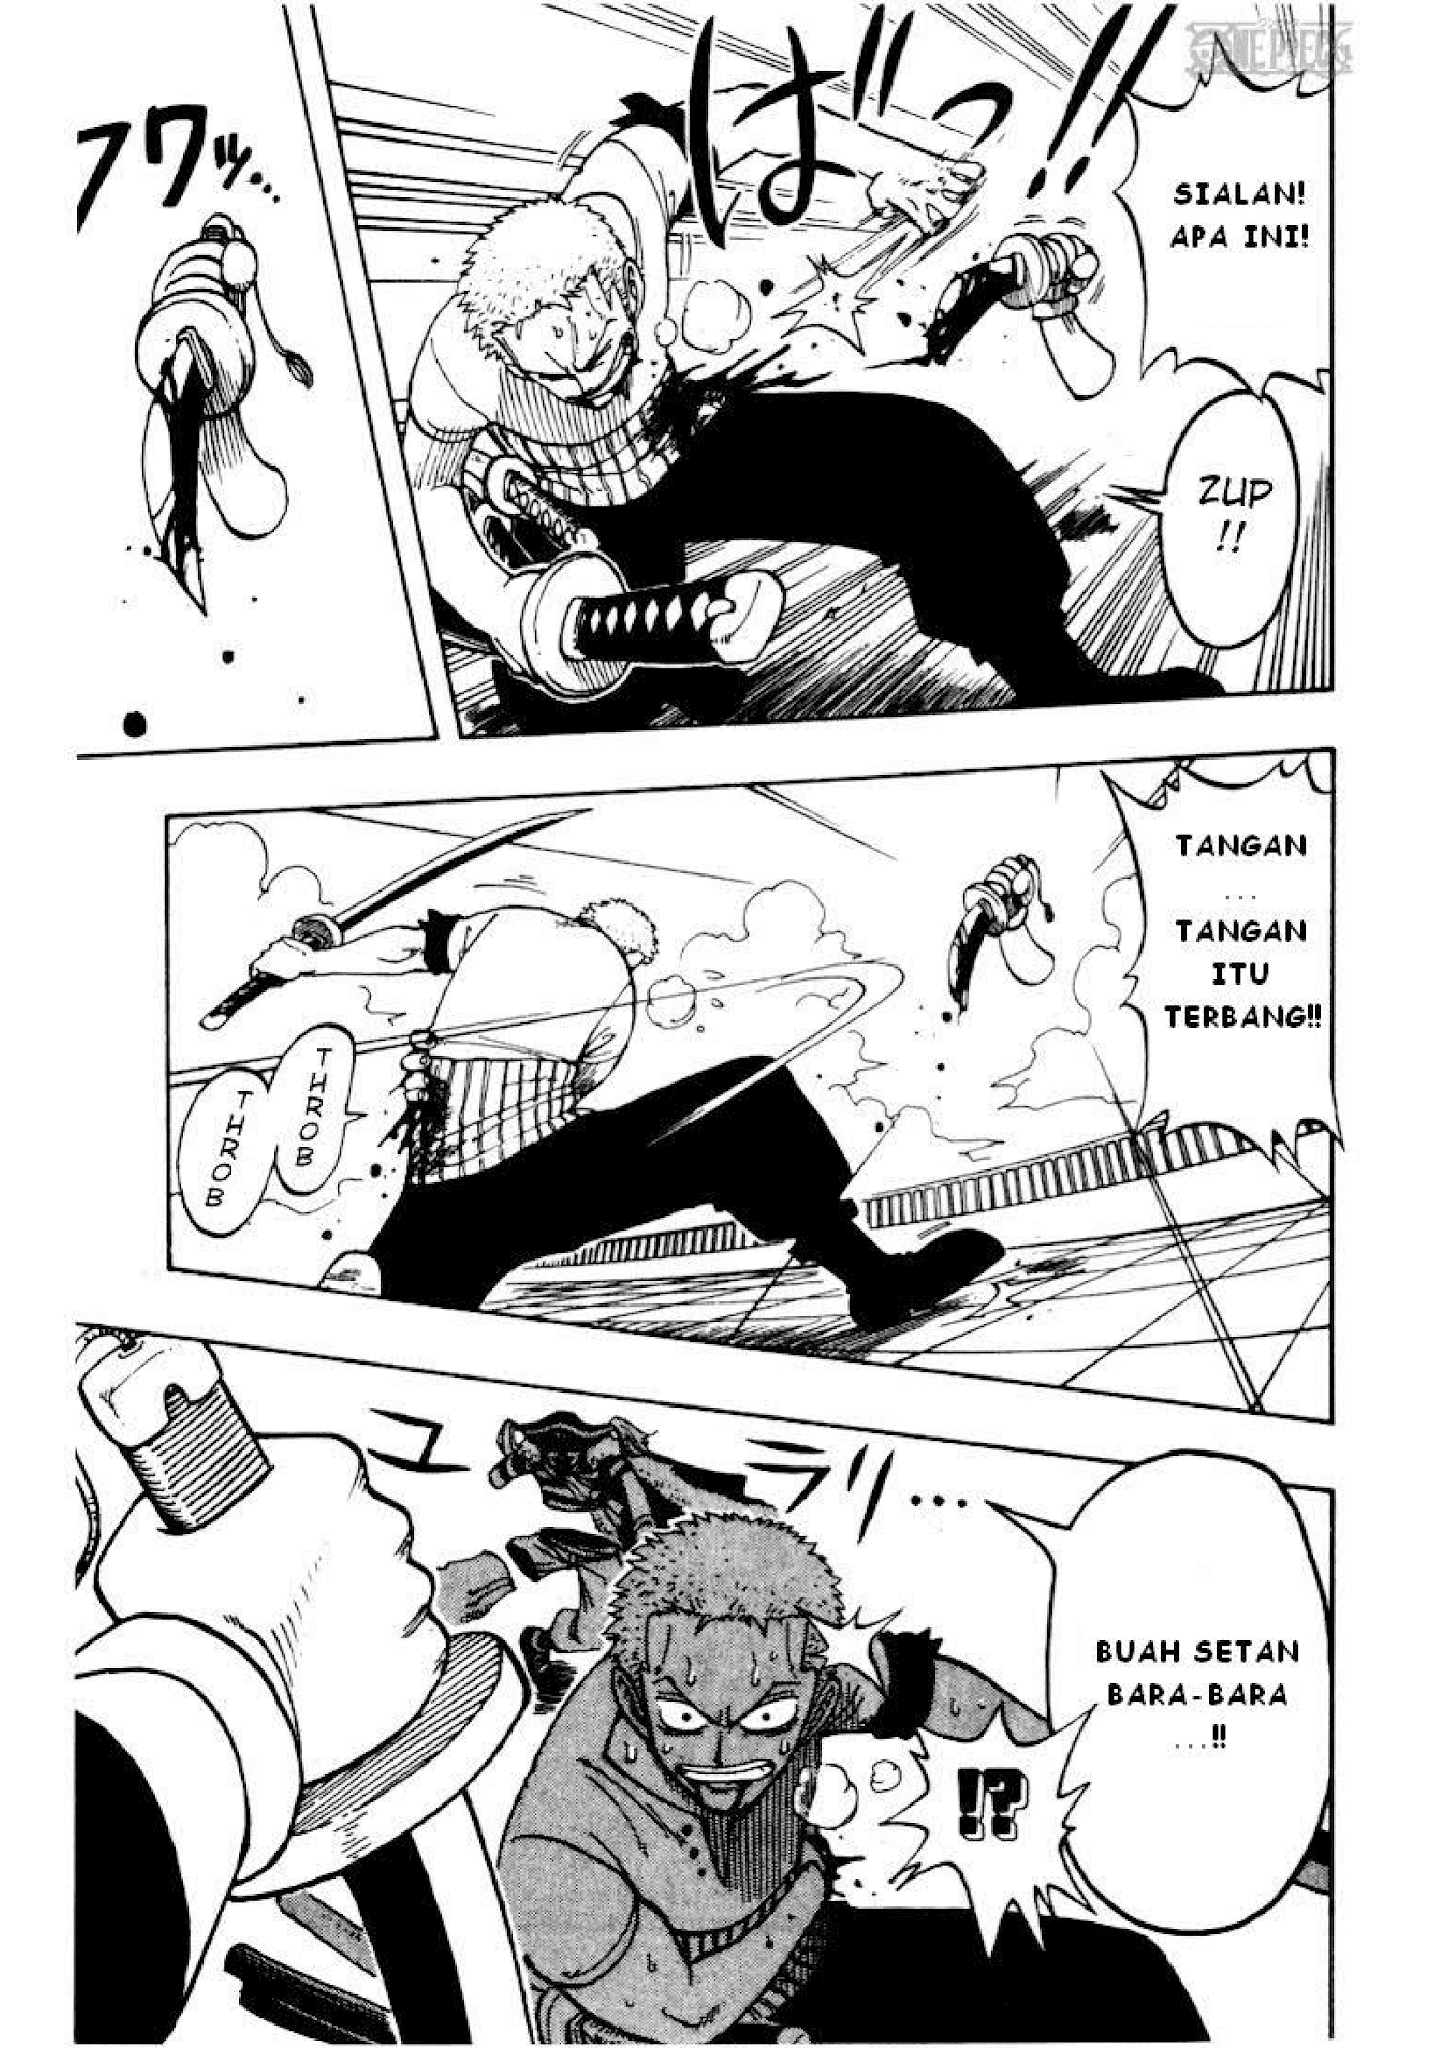 Manga One Piece Chapter 0011 Bahasa Indonesia